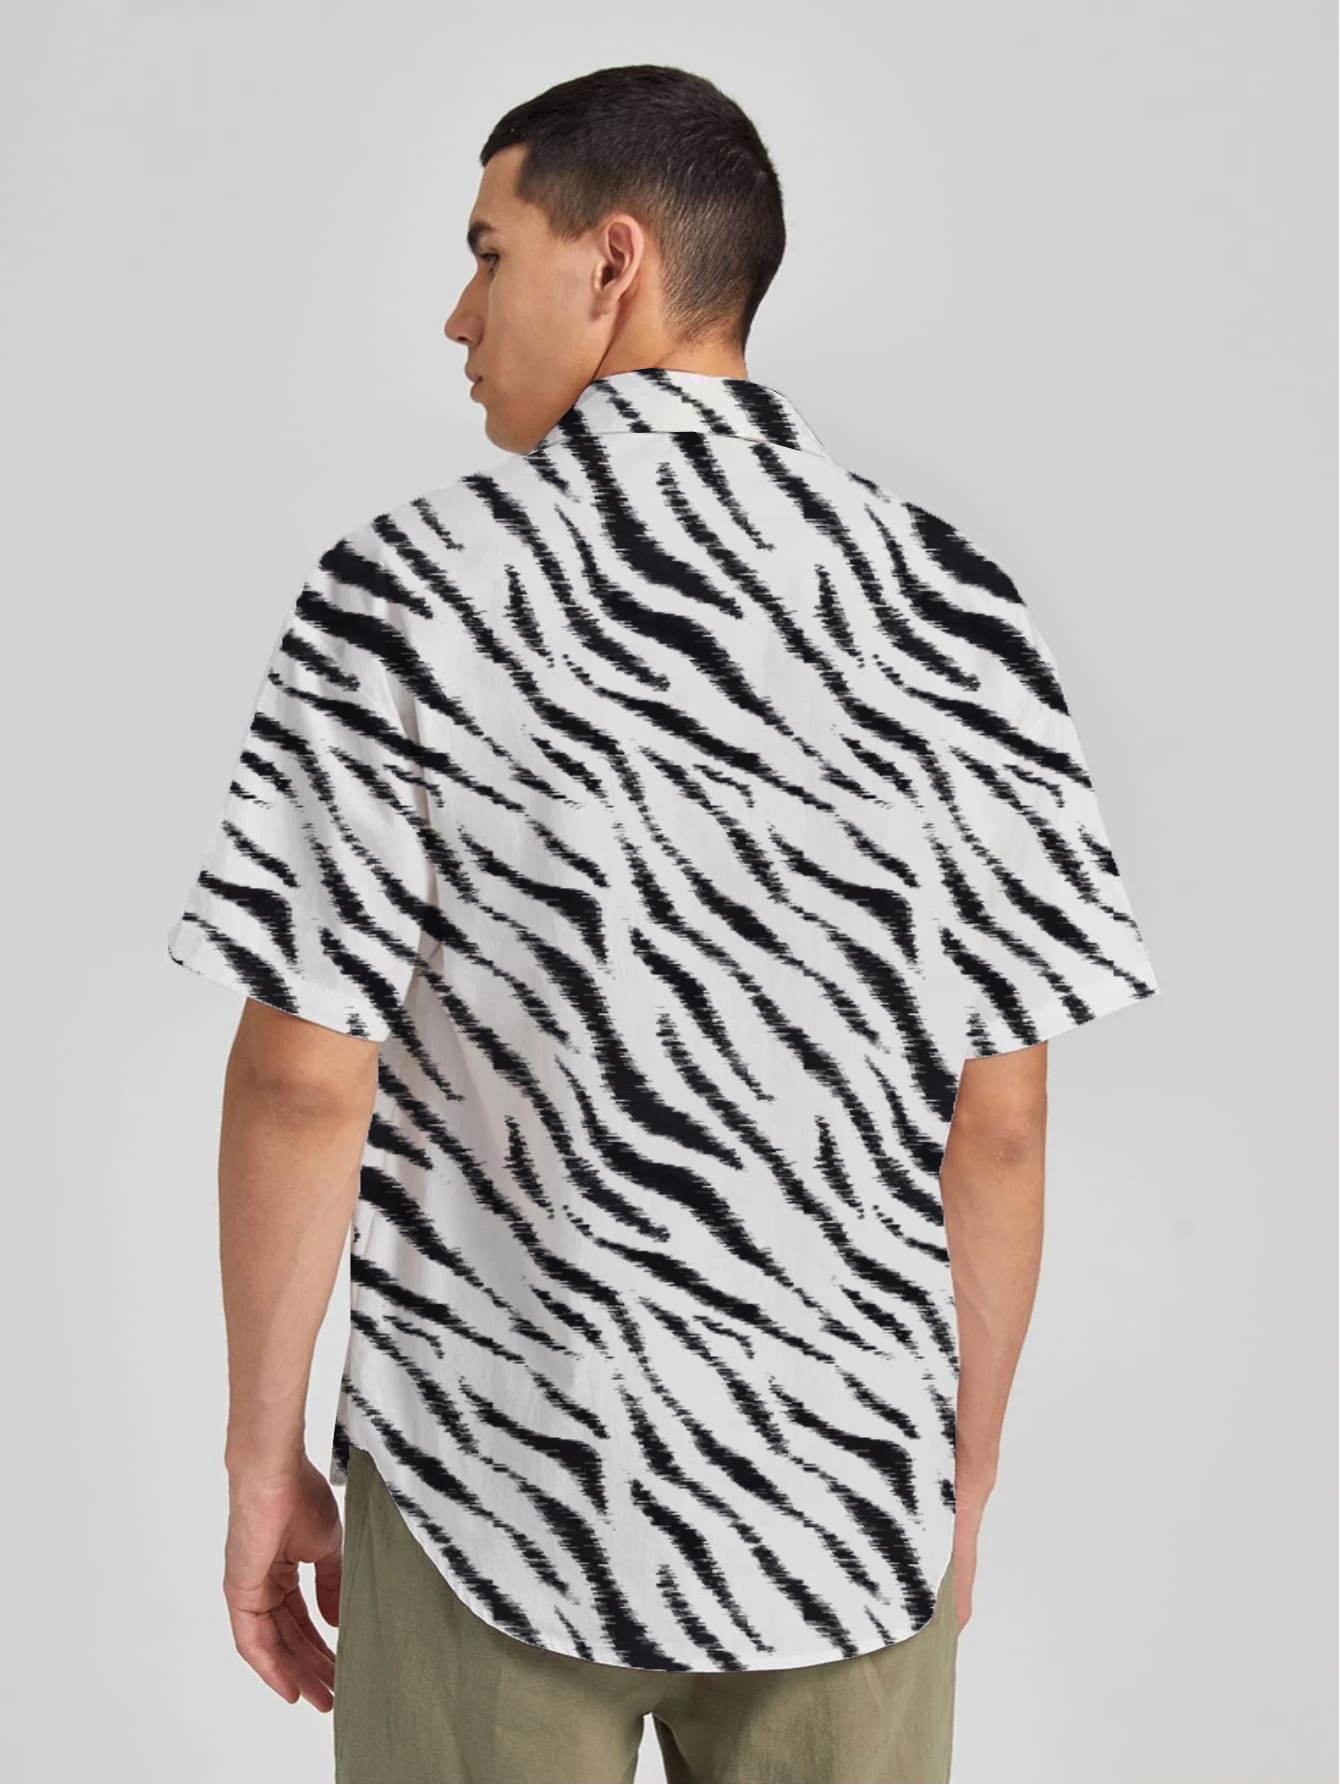 Zebra Print Short Sleeve Shirt